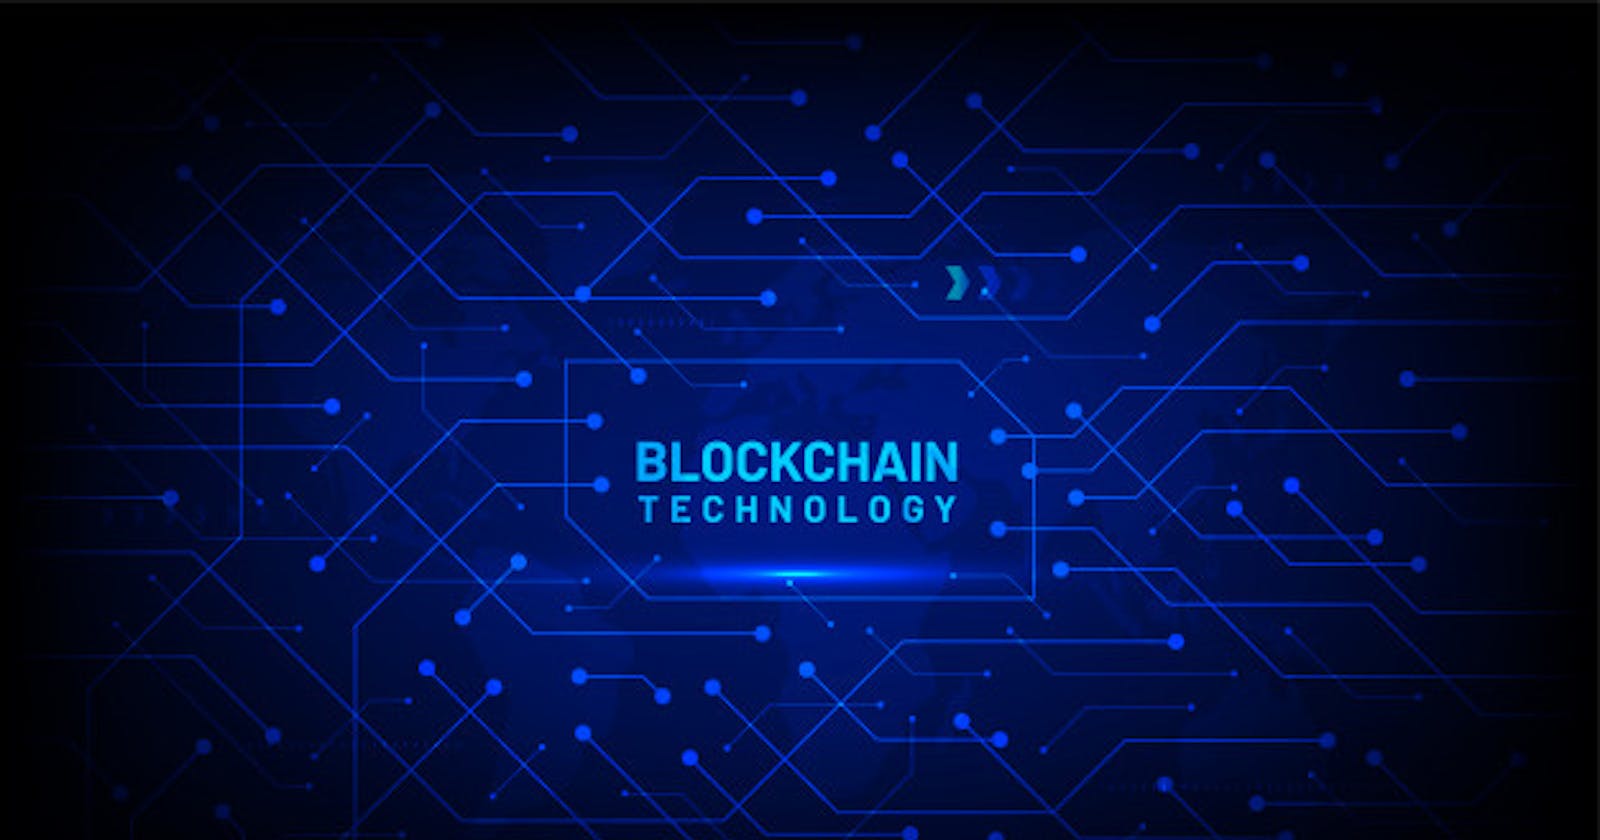 Intro to 'Blockchain technology - 101' series.